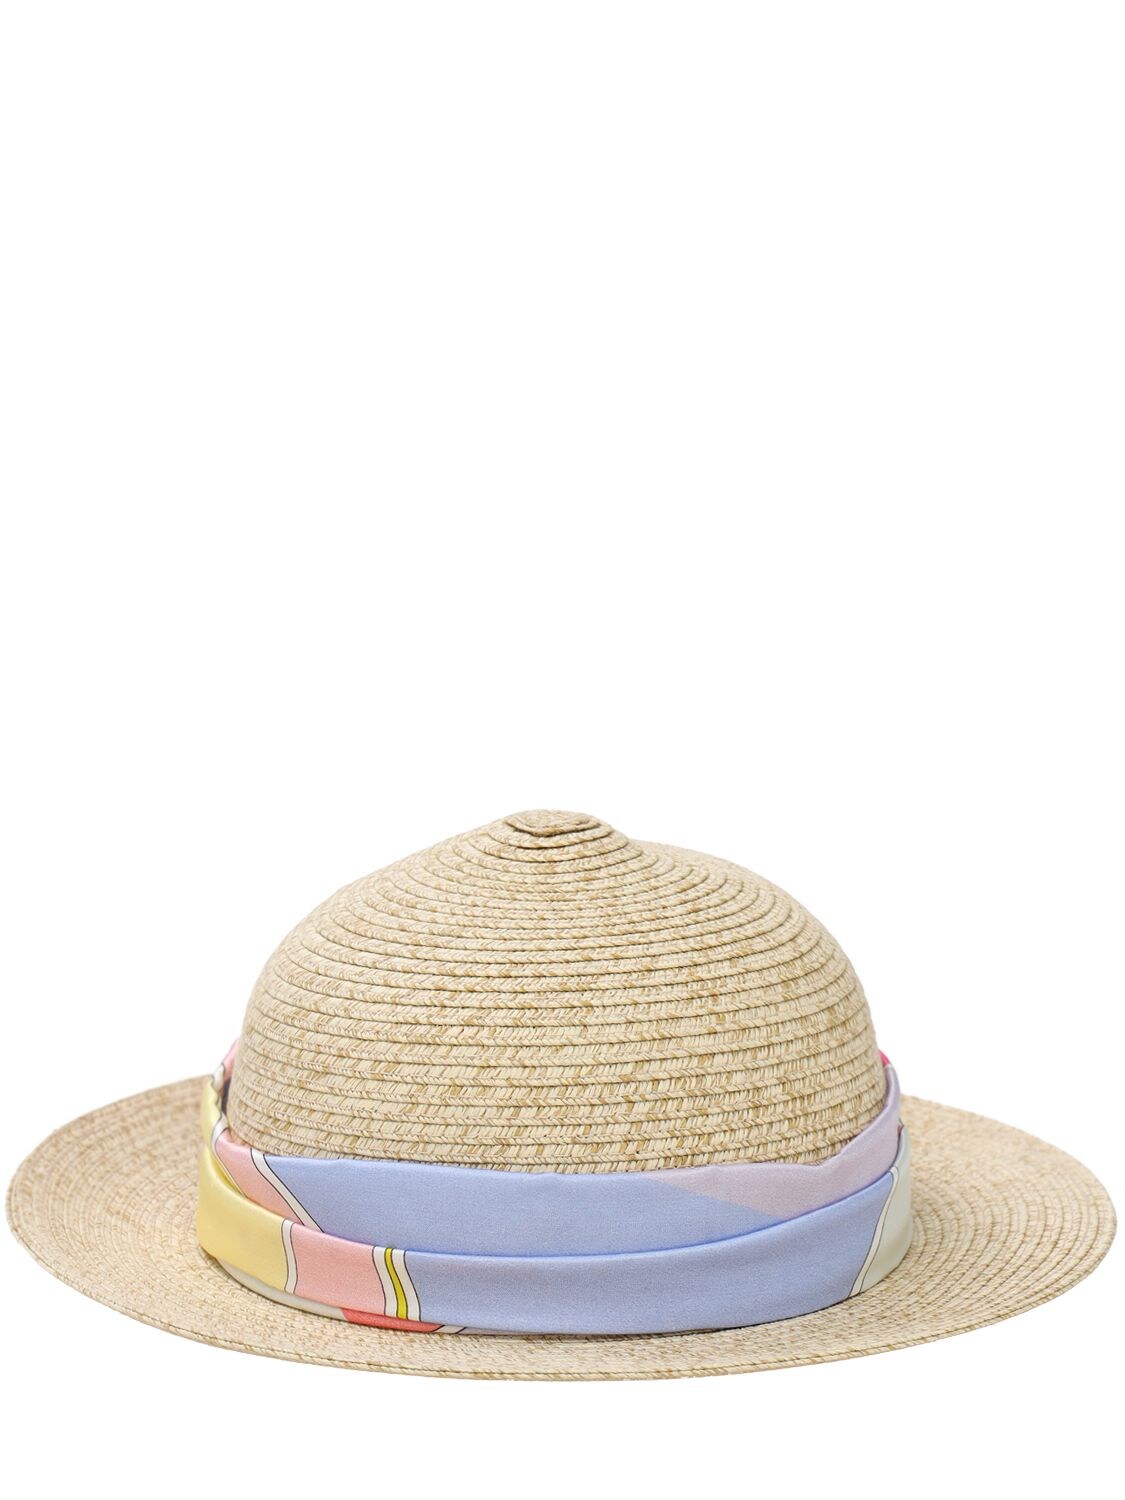 Emilio Pucci Kids' Paper Hat W/ Printed Hatband In Natural